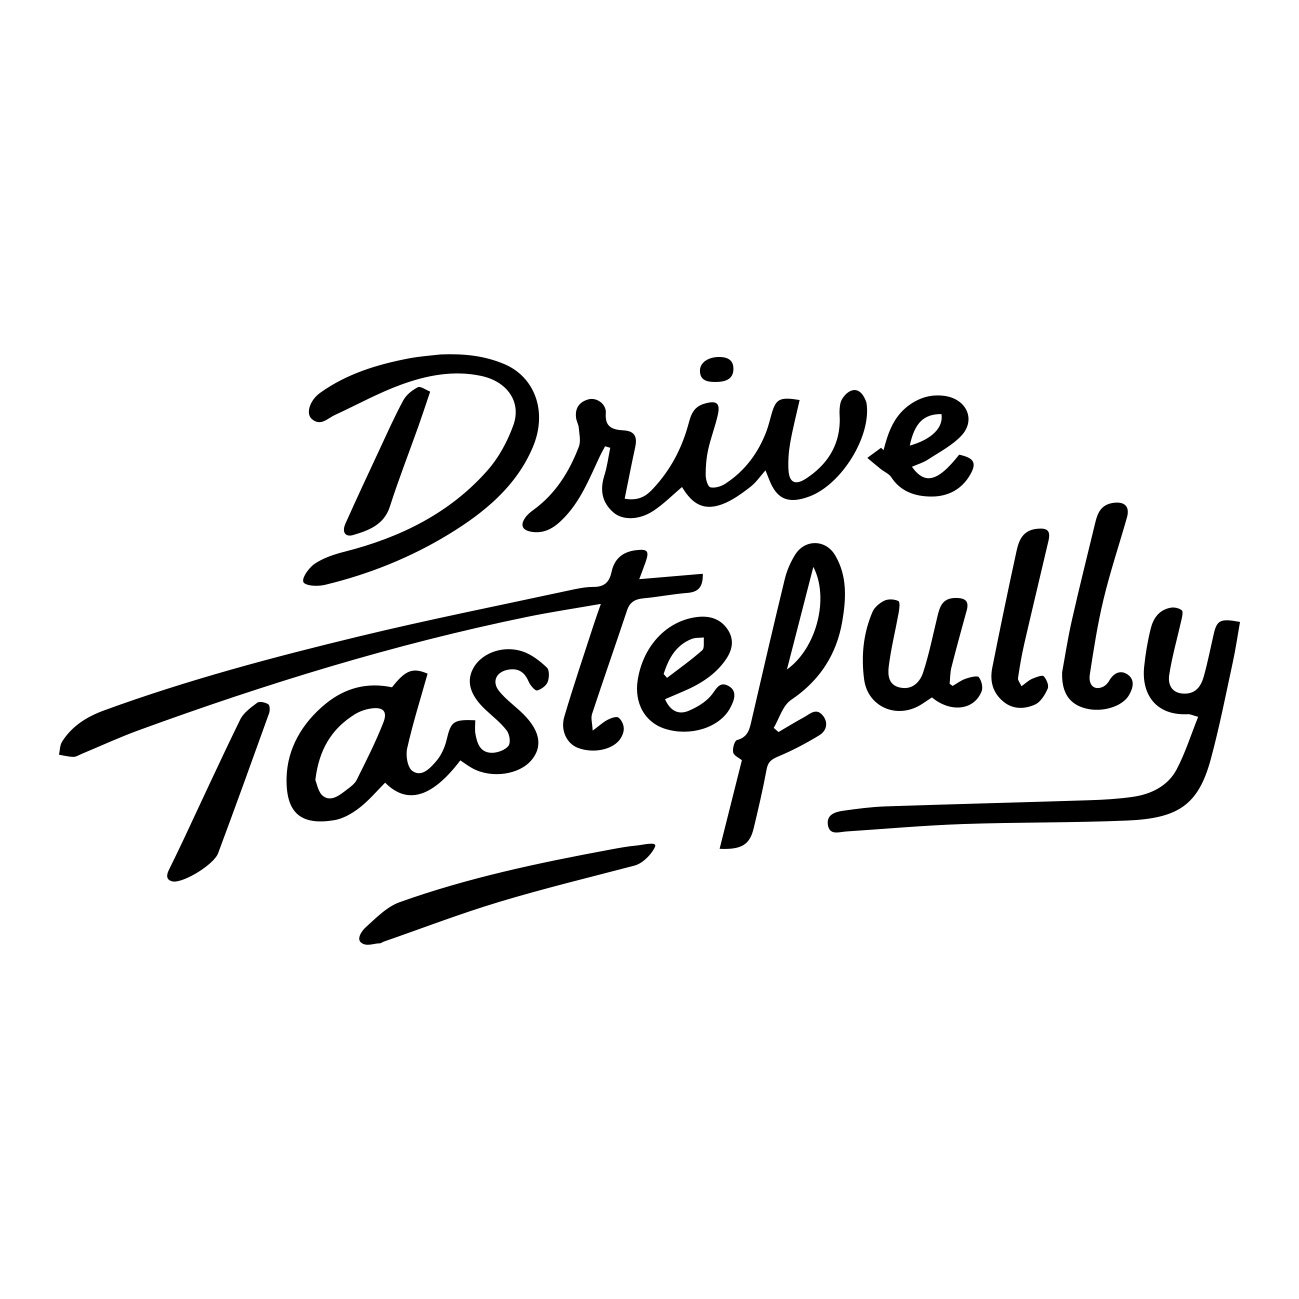 drive tastefully